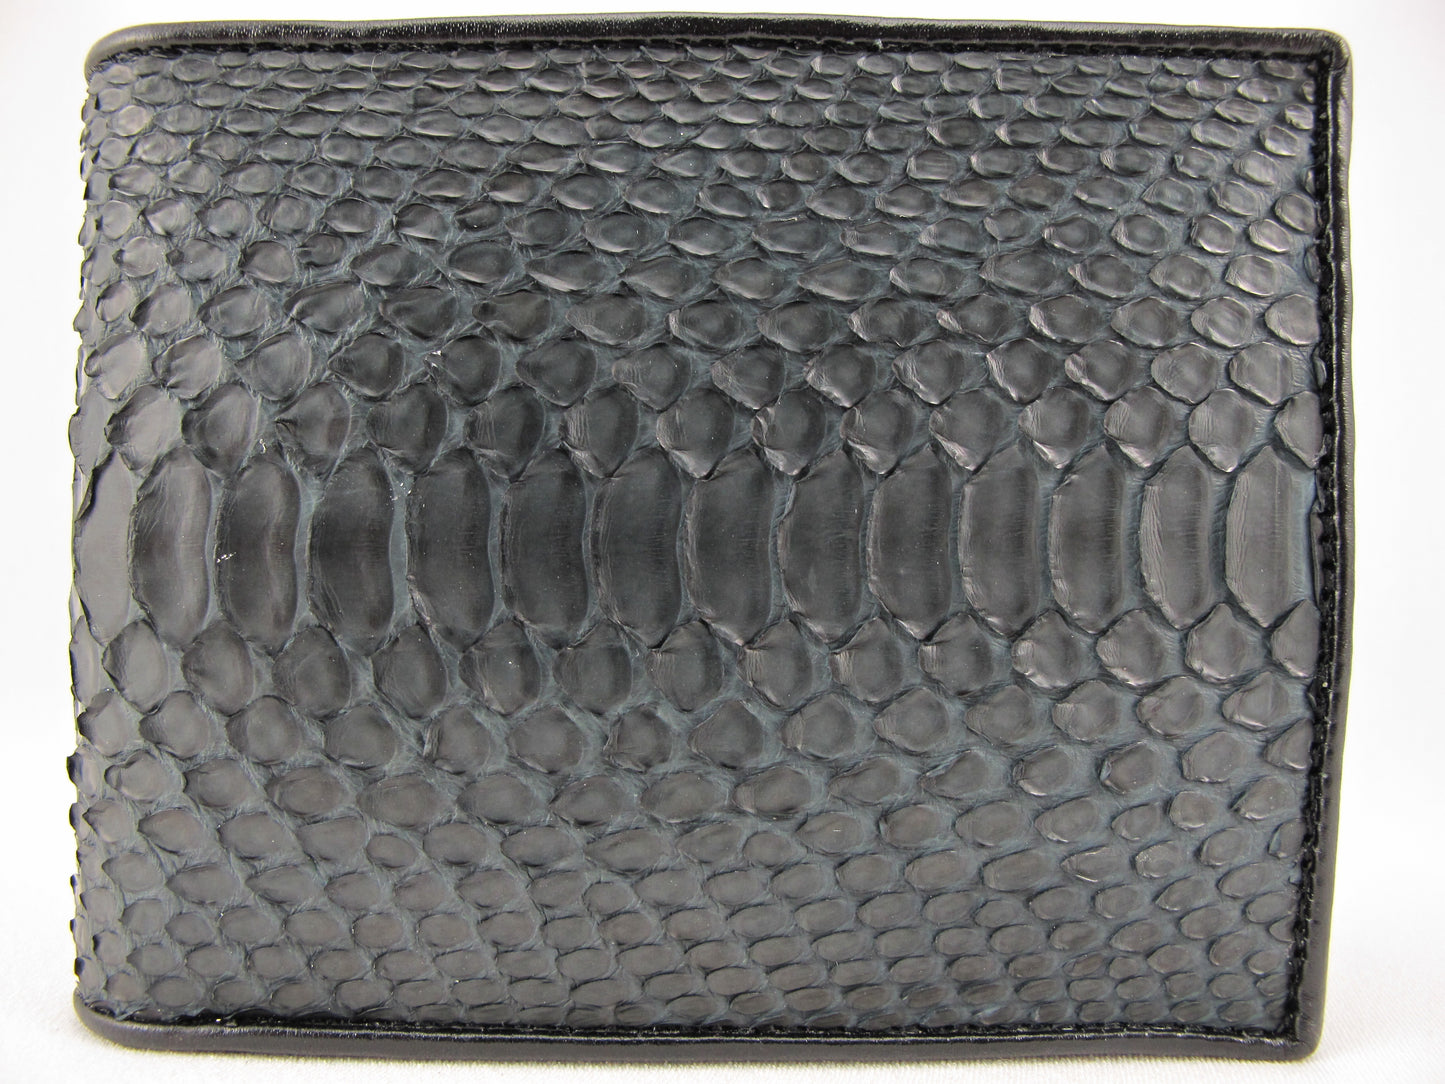 Genuine Python Belly Skin Leather Large Coins Bifold Wallet Black